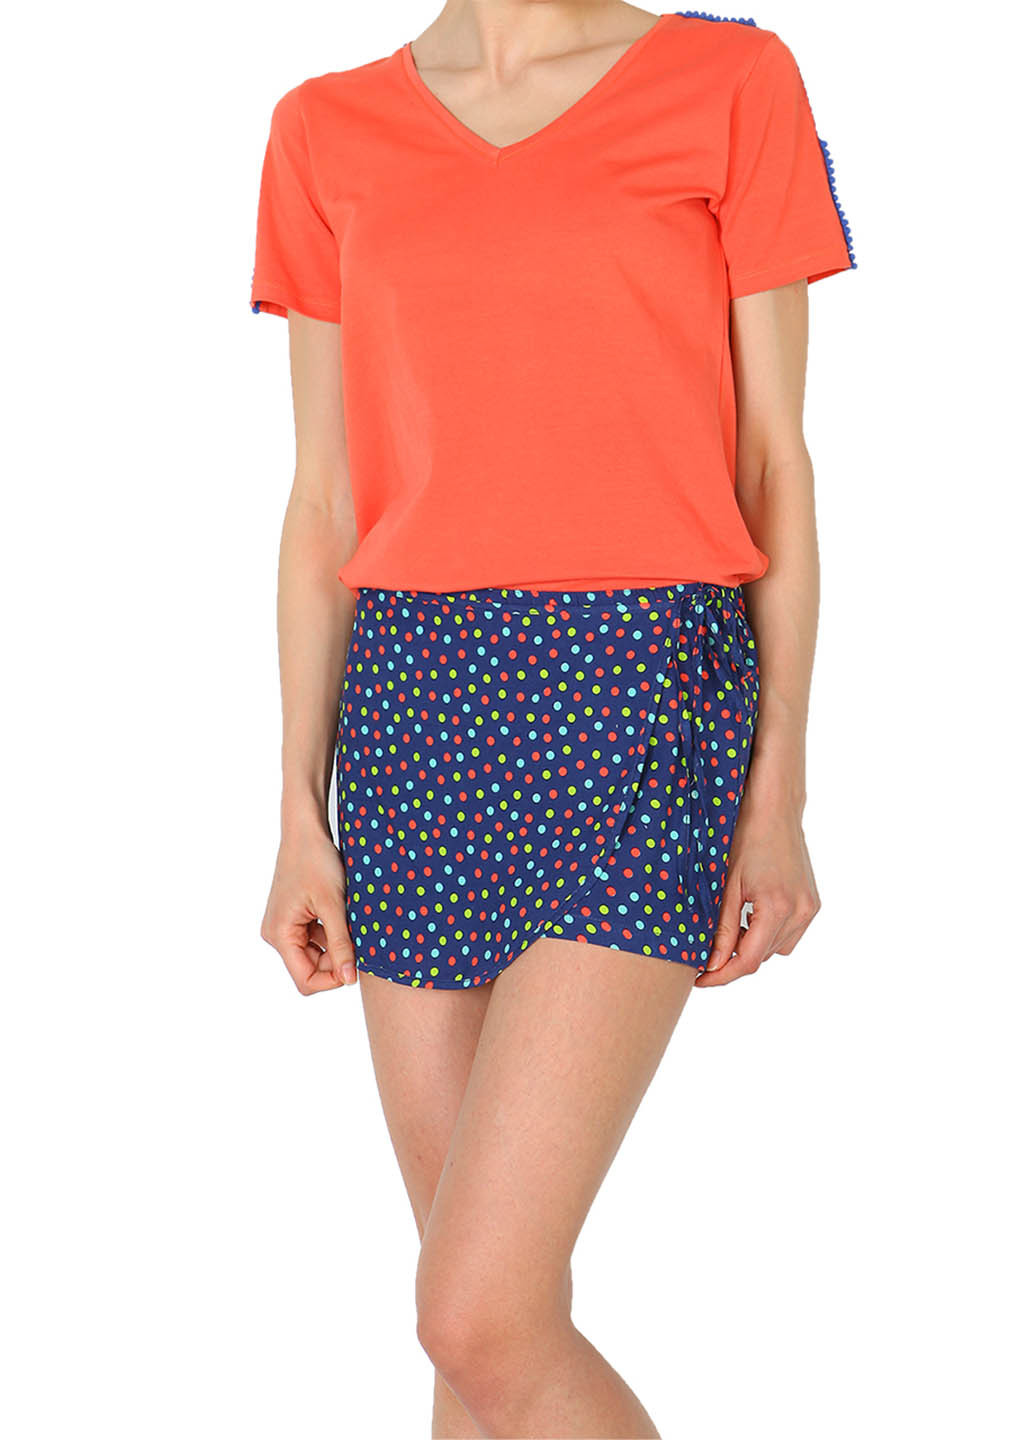 Коралловая всесезон пижама (футболка, шорты) футболка + шорты DoReMi